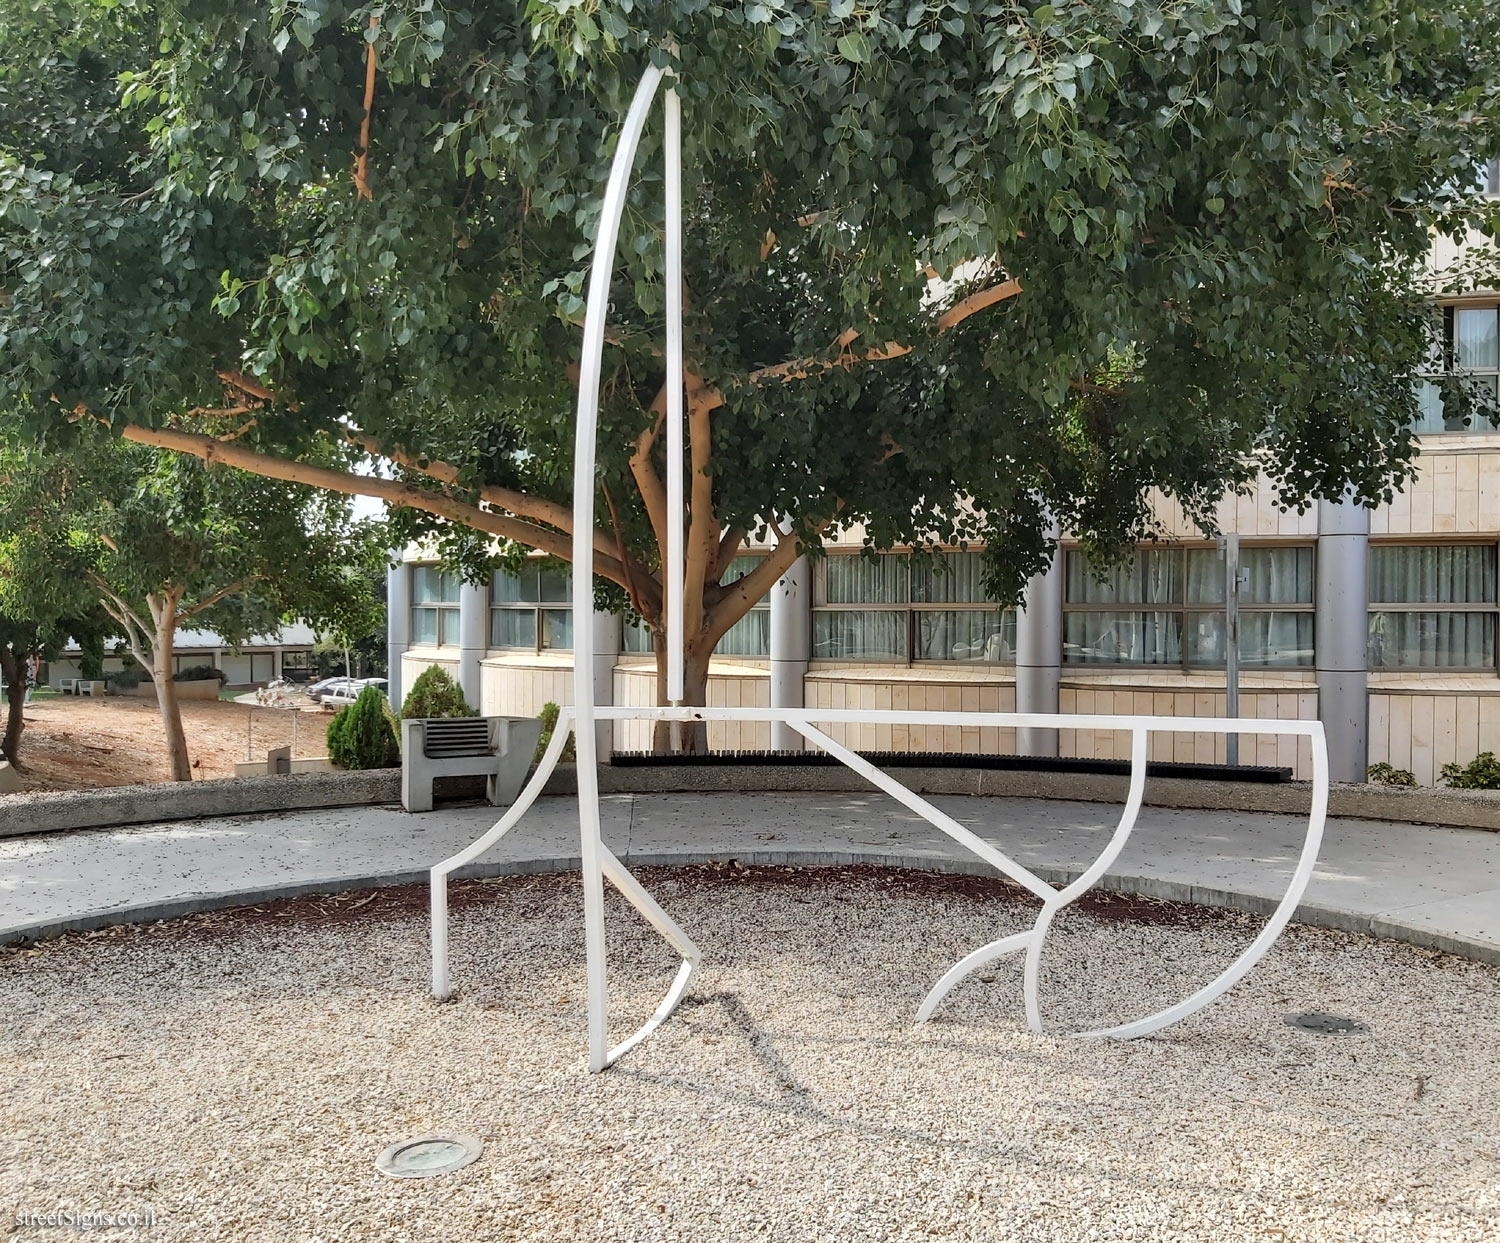 "Lines of Imagination" Yoram Afek outdoor sculpture - The Topor sculpture garden at Sheba Hospital in Tel Hashomer